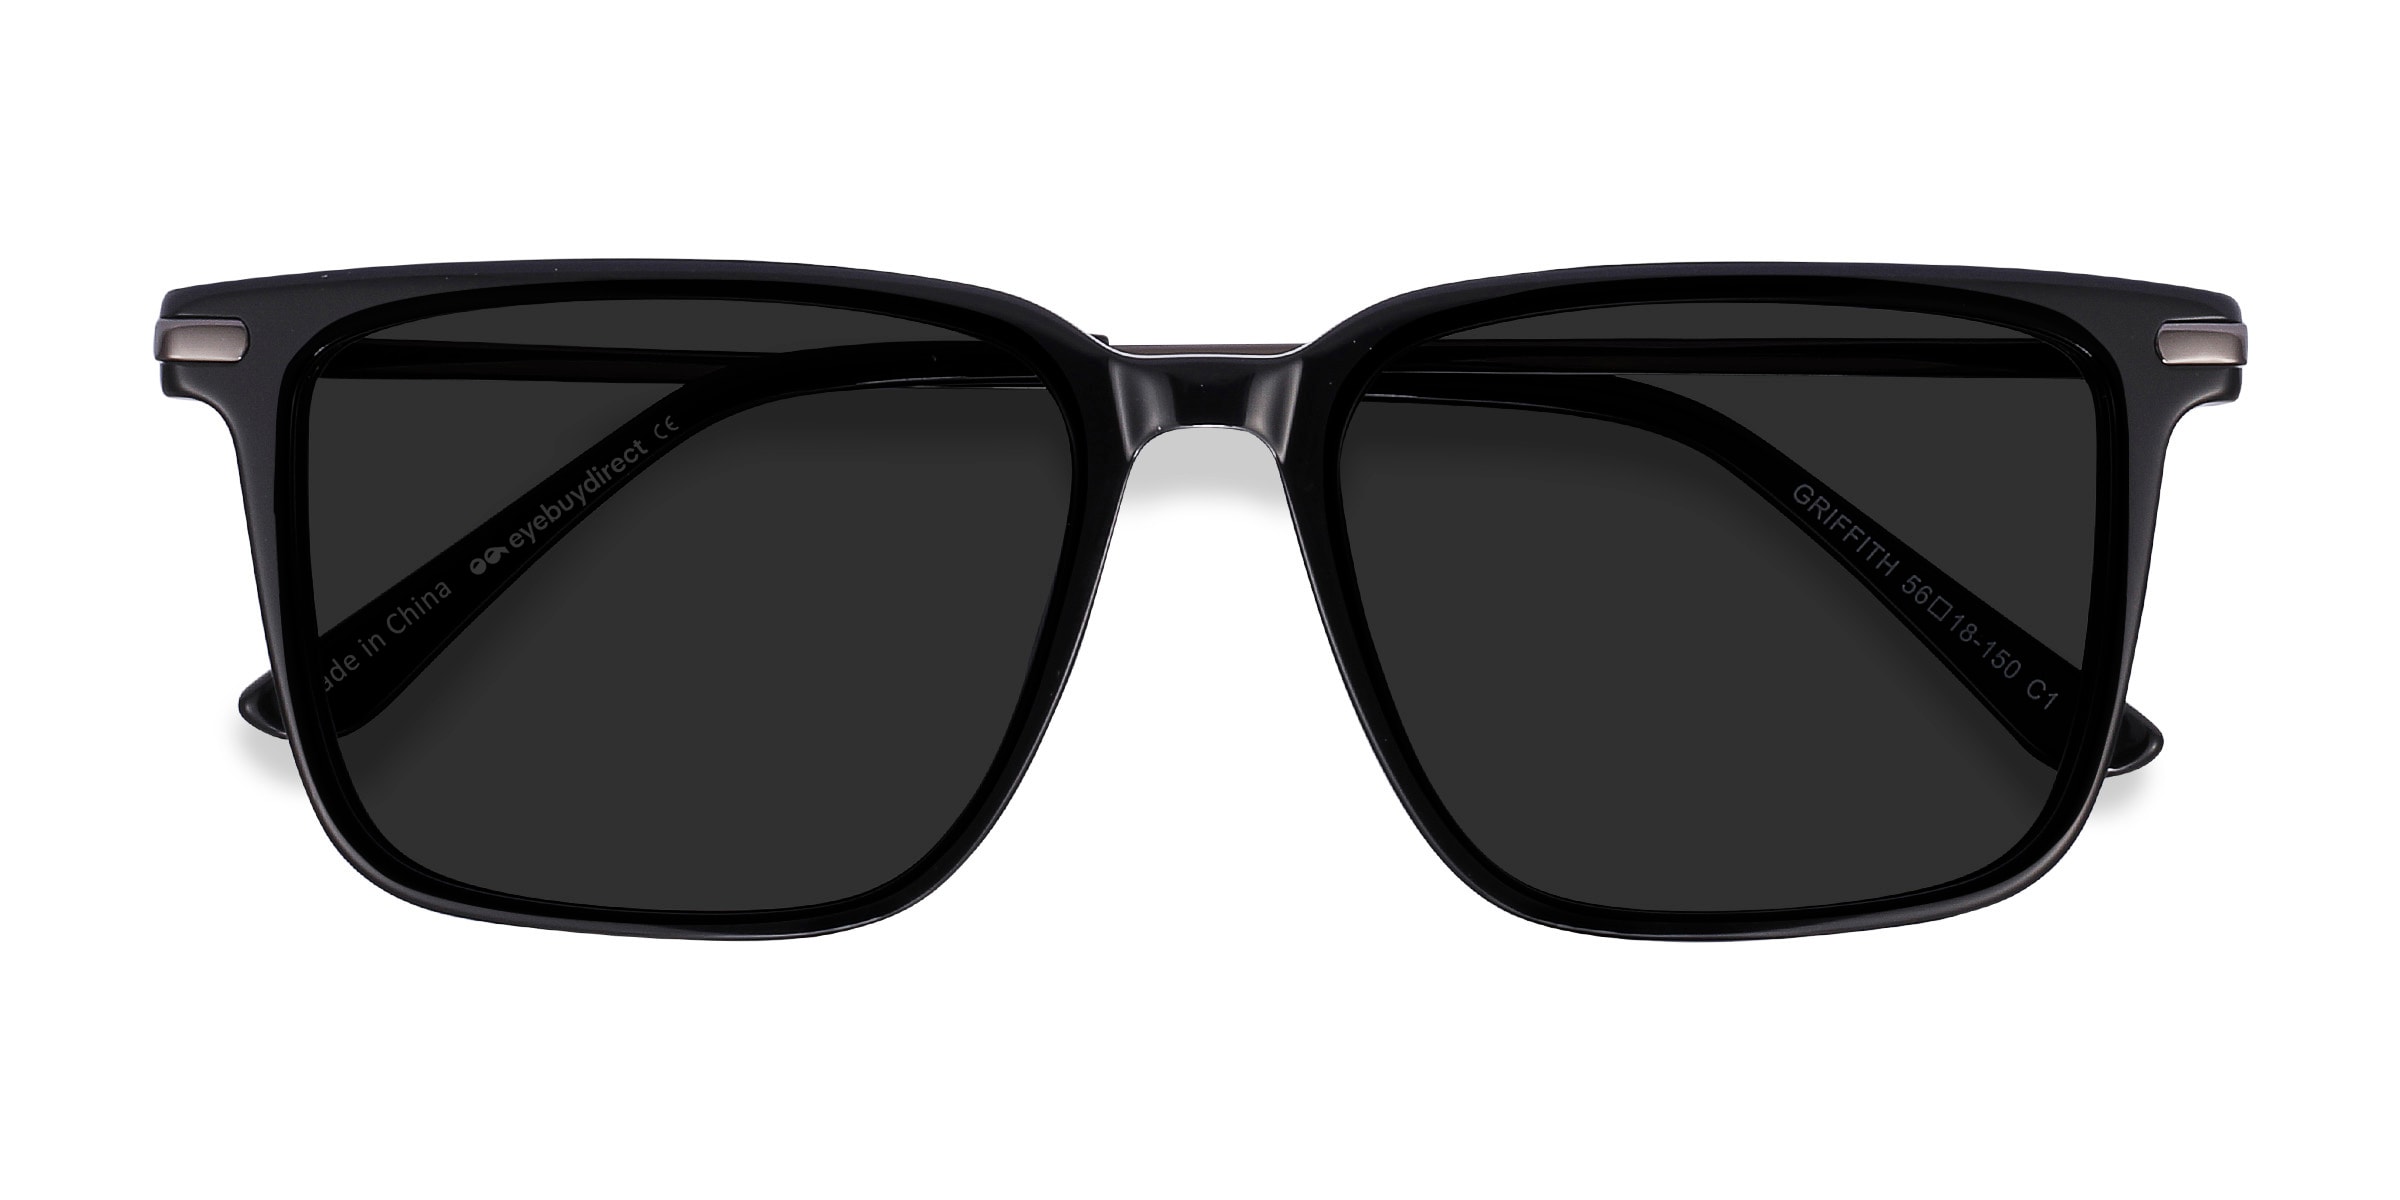 Sunvoir Black Tinted Square Sunglasses S12C3551 @ ₹1799